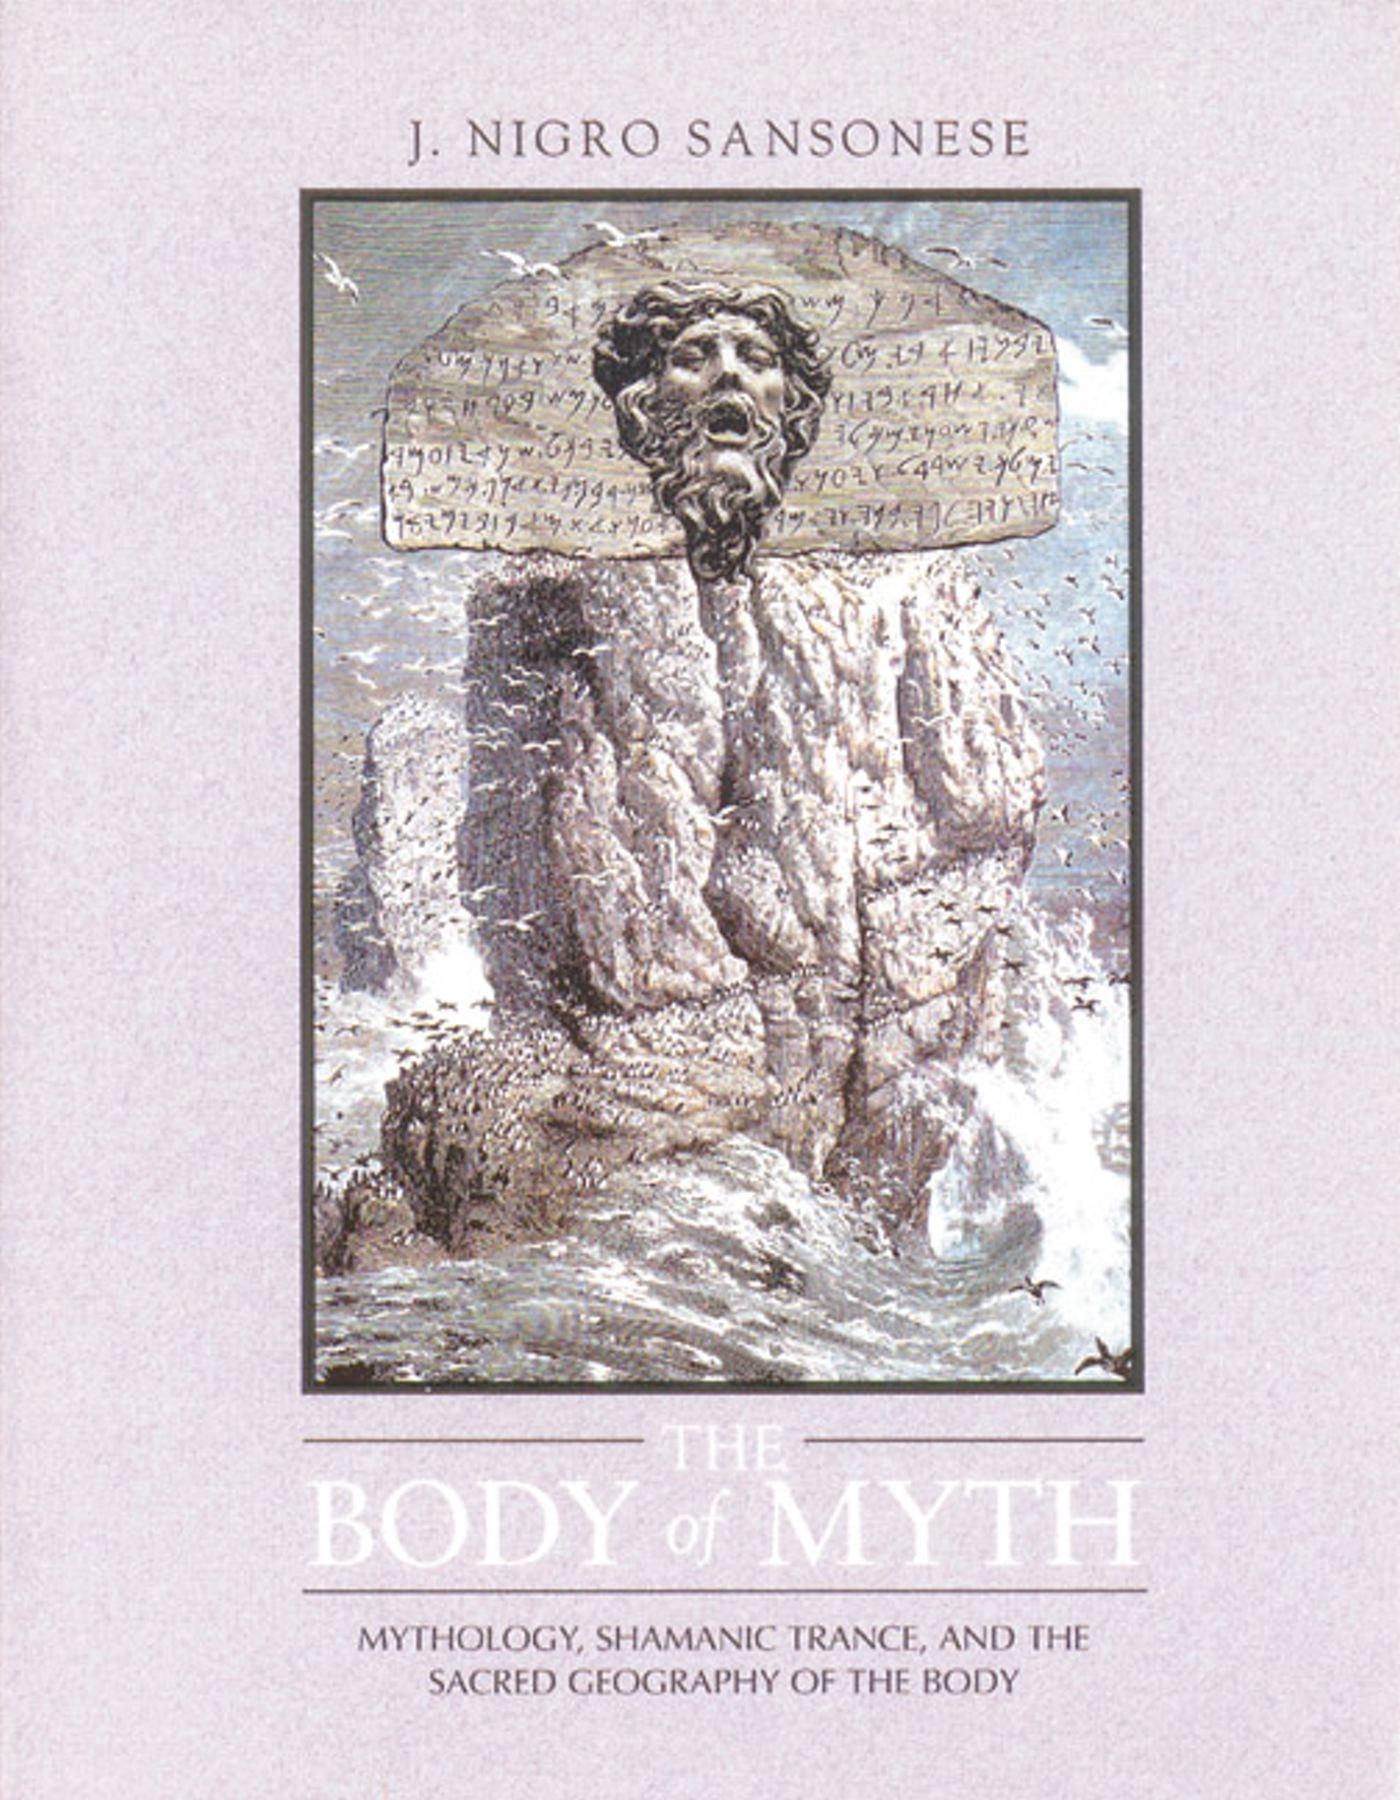 The Body of Myth: Mythology, Shamanic Trance, and the Sacred Geography of the Body / J. Nigro Sansonese / Taschenbuch / Englisch / 1994 / INNER TRADITIONS / EAN 9780892814091 - Sansonese, J. Nigro